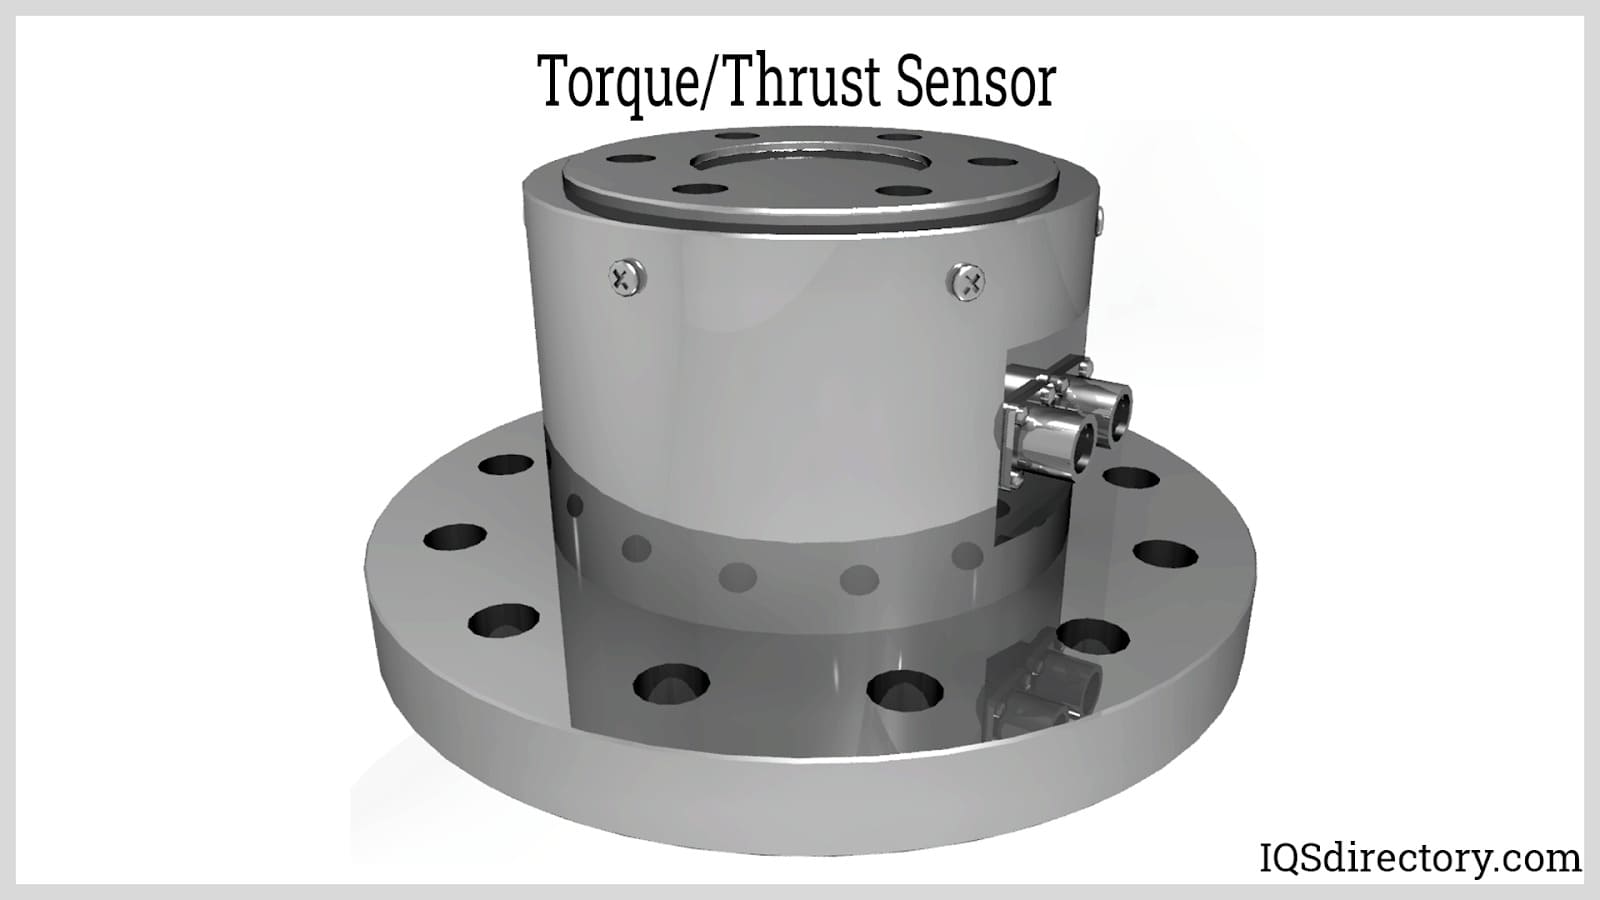 Torque/Thrust Sensor